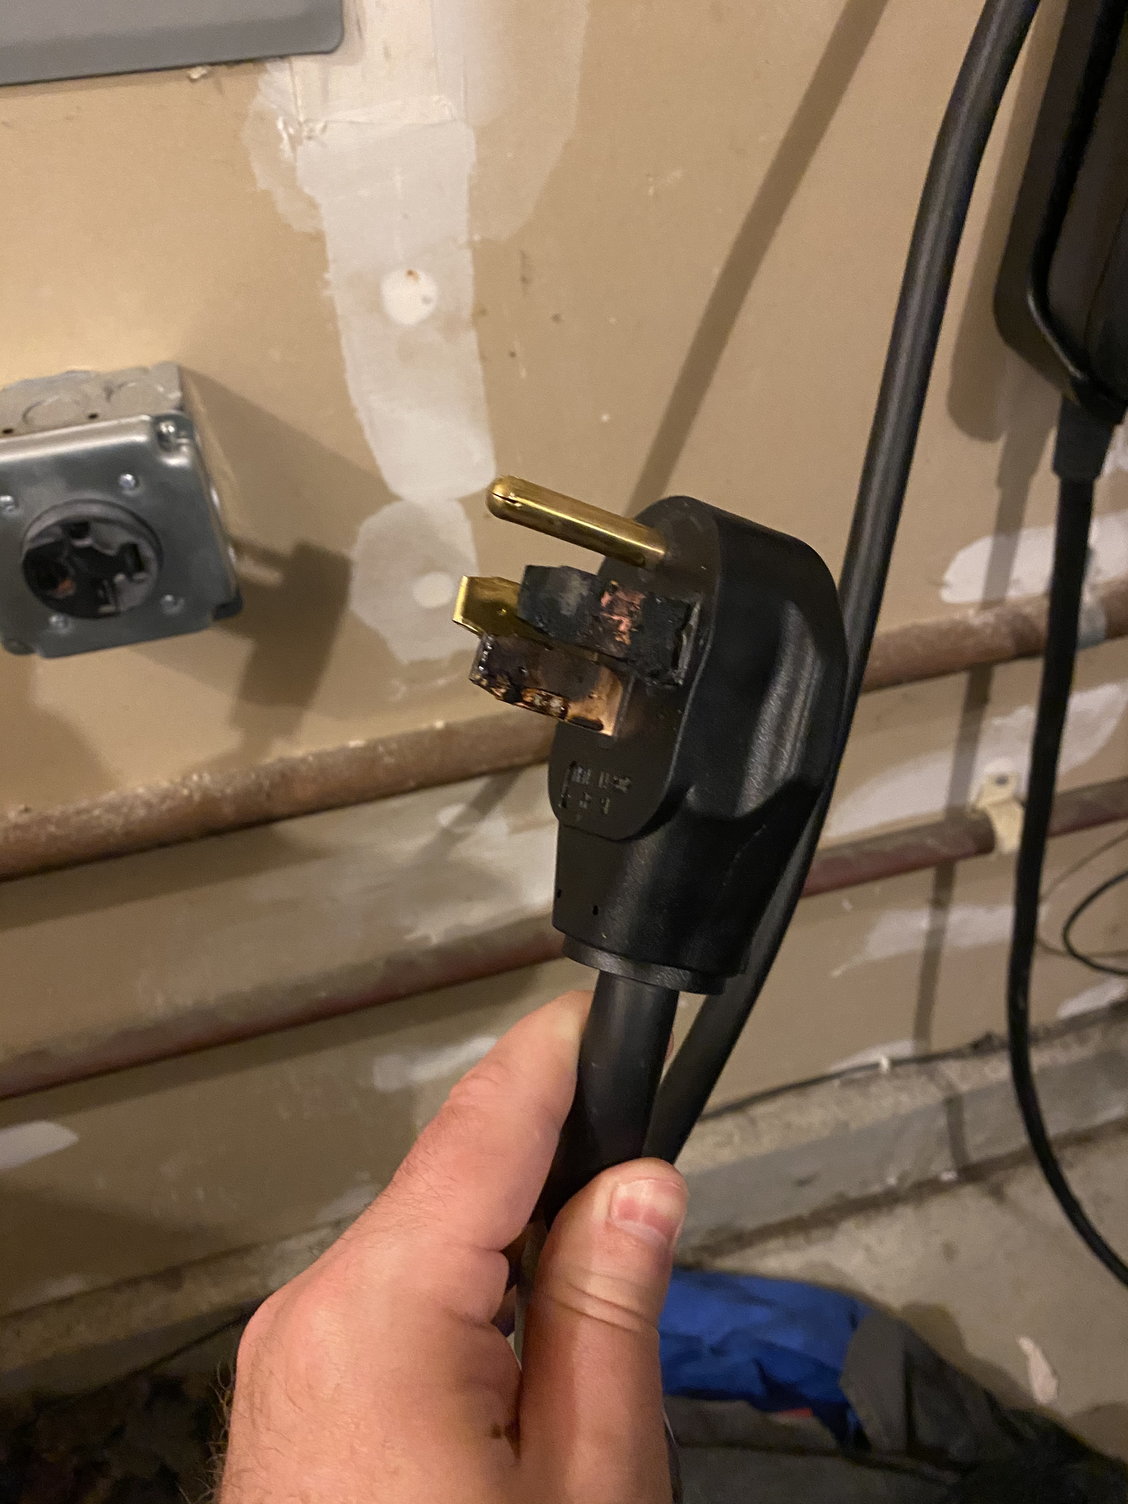 Electrician used wrong wire? Tesla Wall Connector 6 Gauge Romex :  r/evcharging